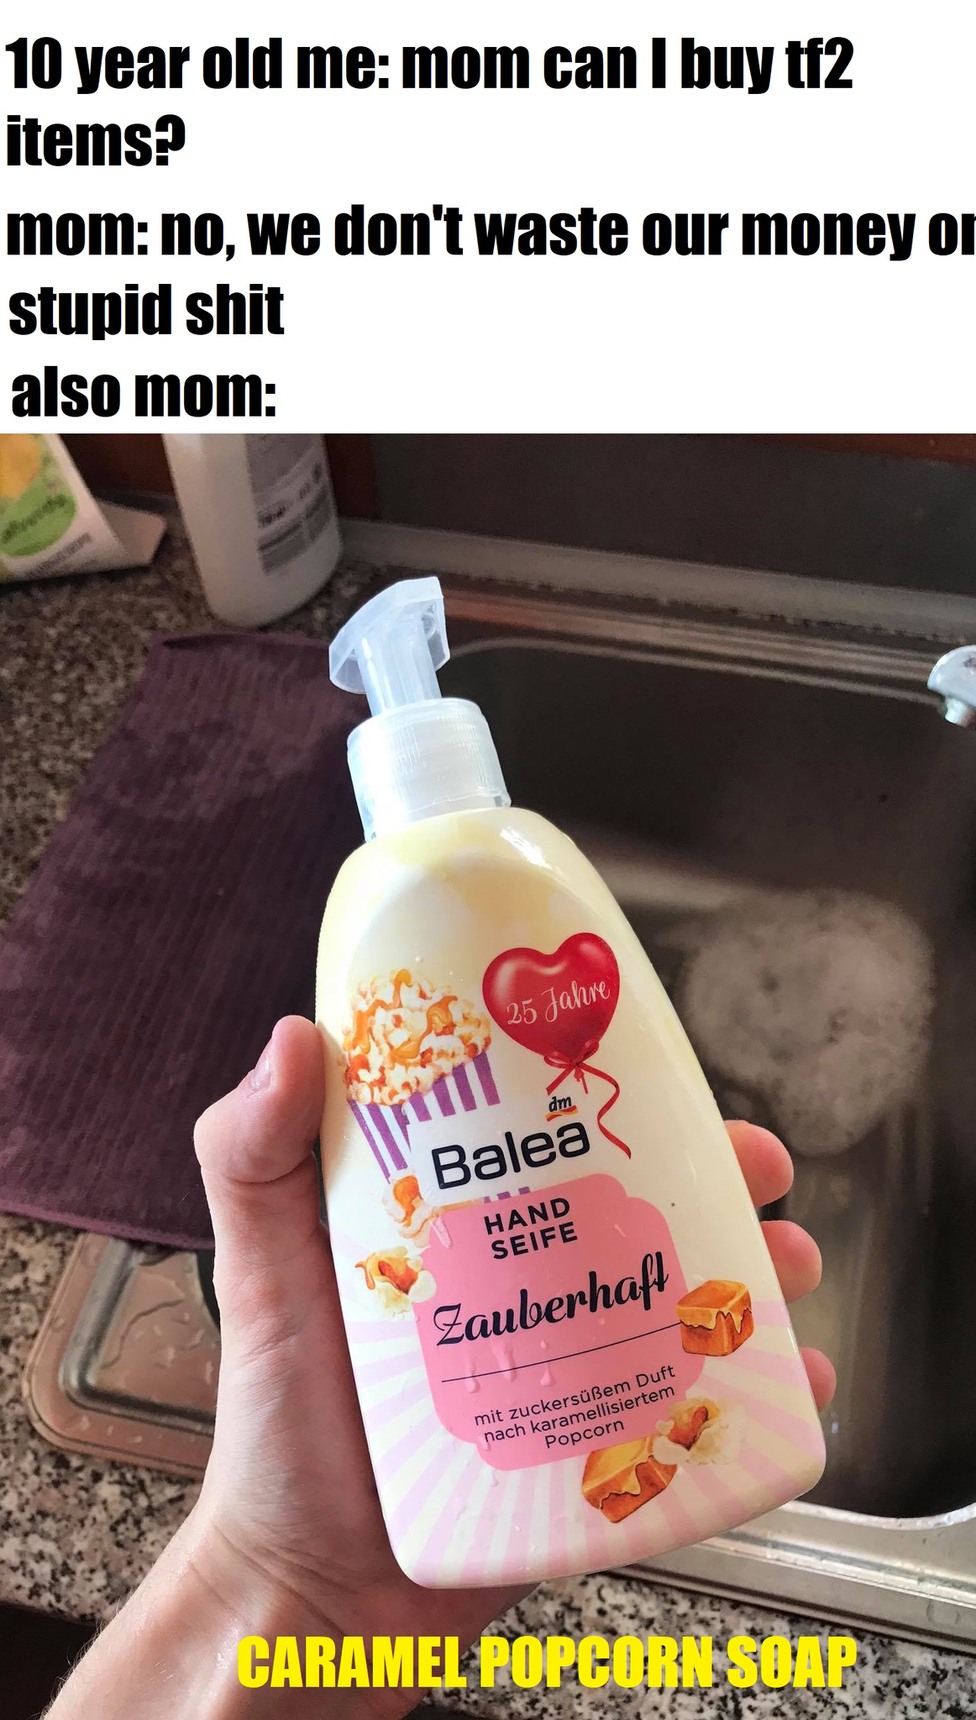 soap - meme